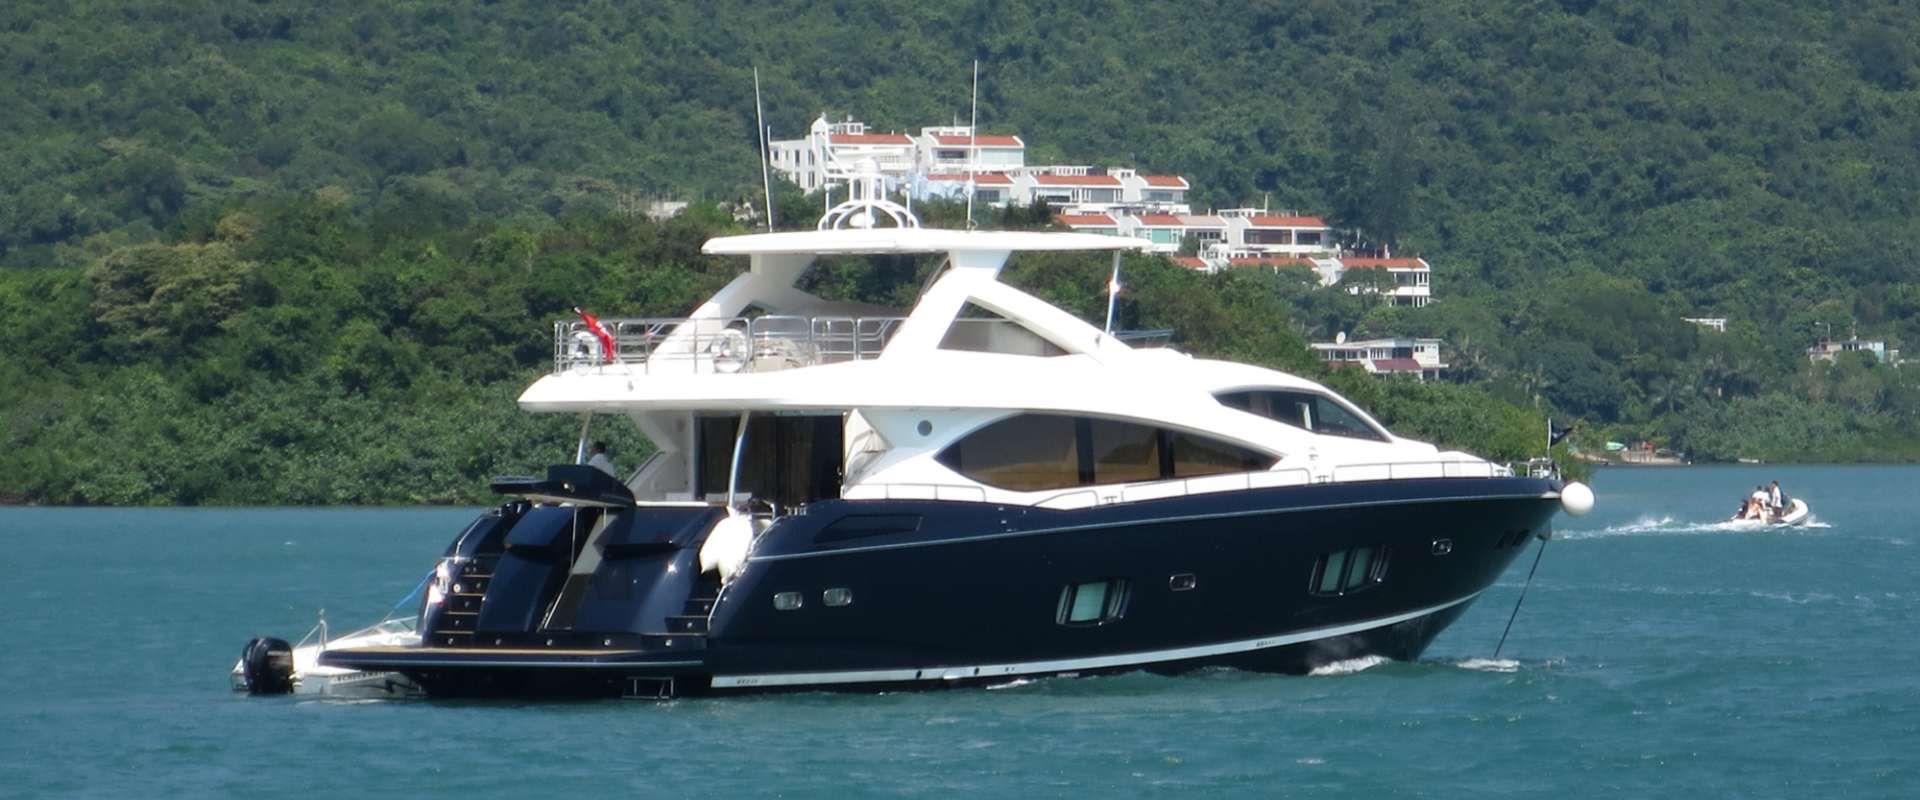 Sunseeker 88 yacht for sale